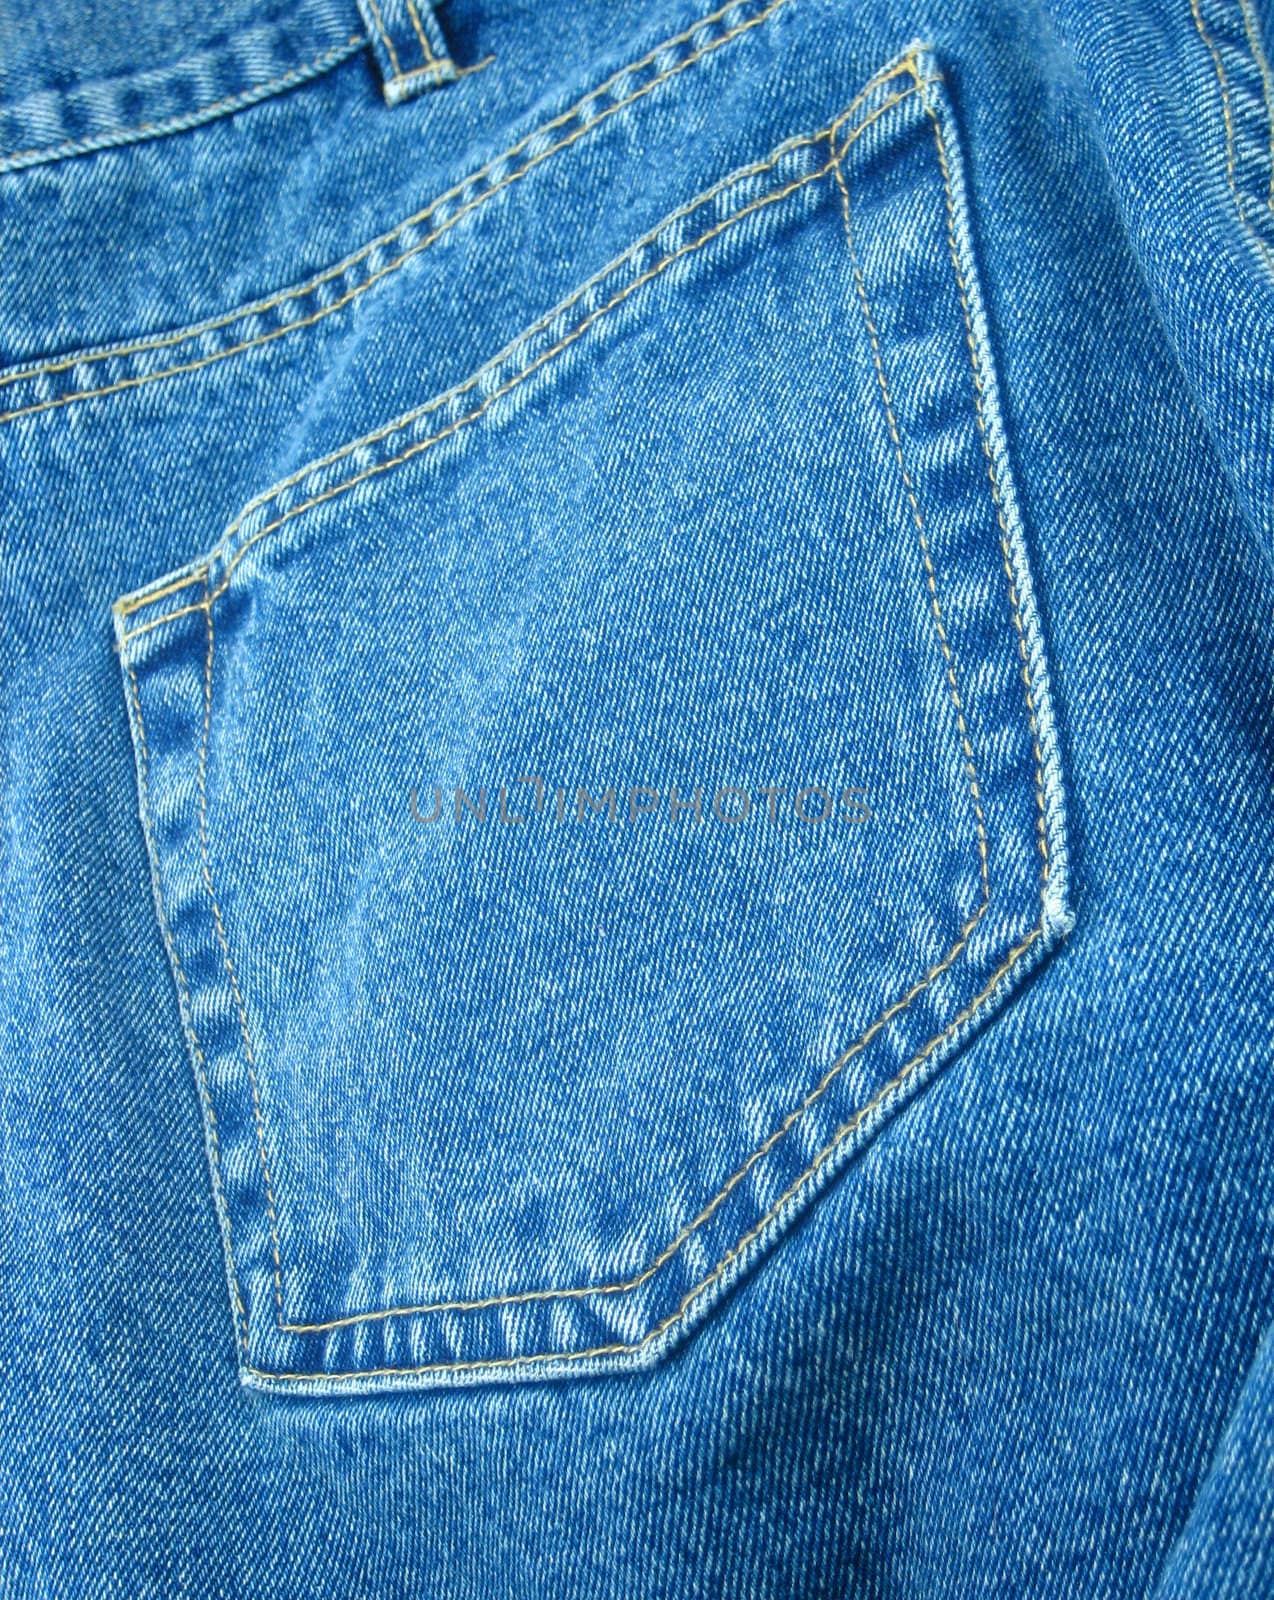 Blue jeans by albln